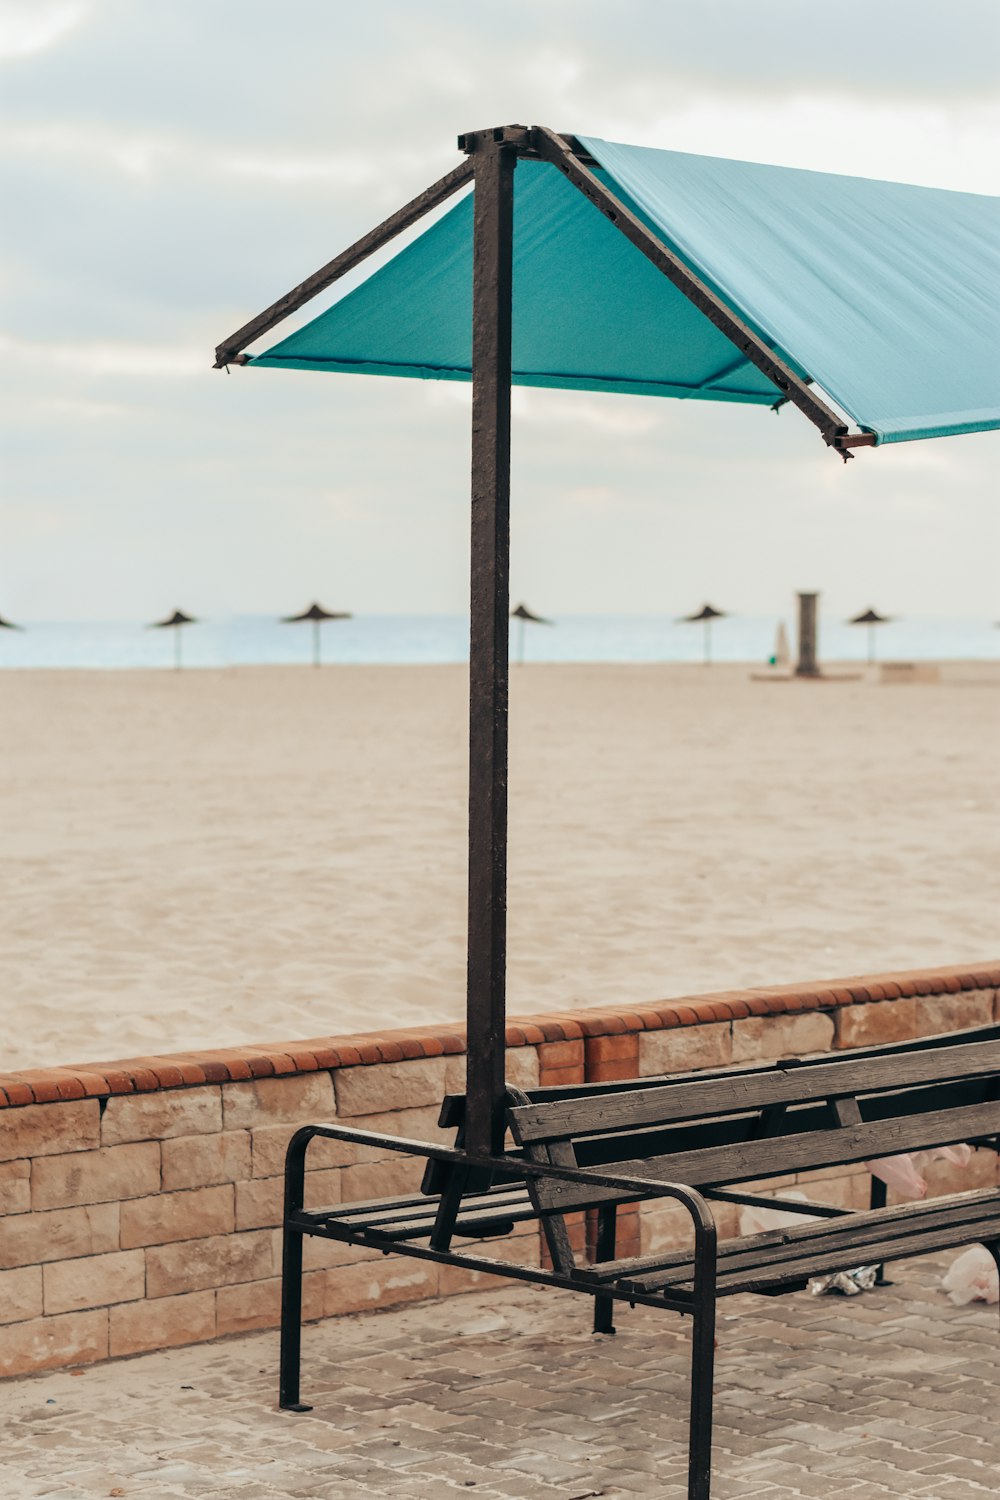 a bench under a blue umbrella on a beach